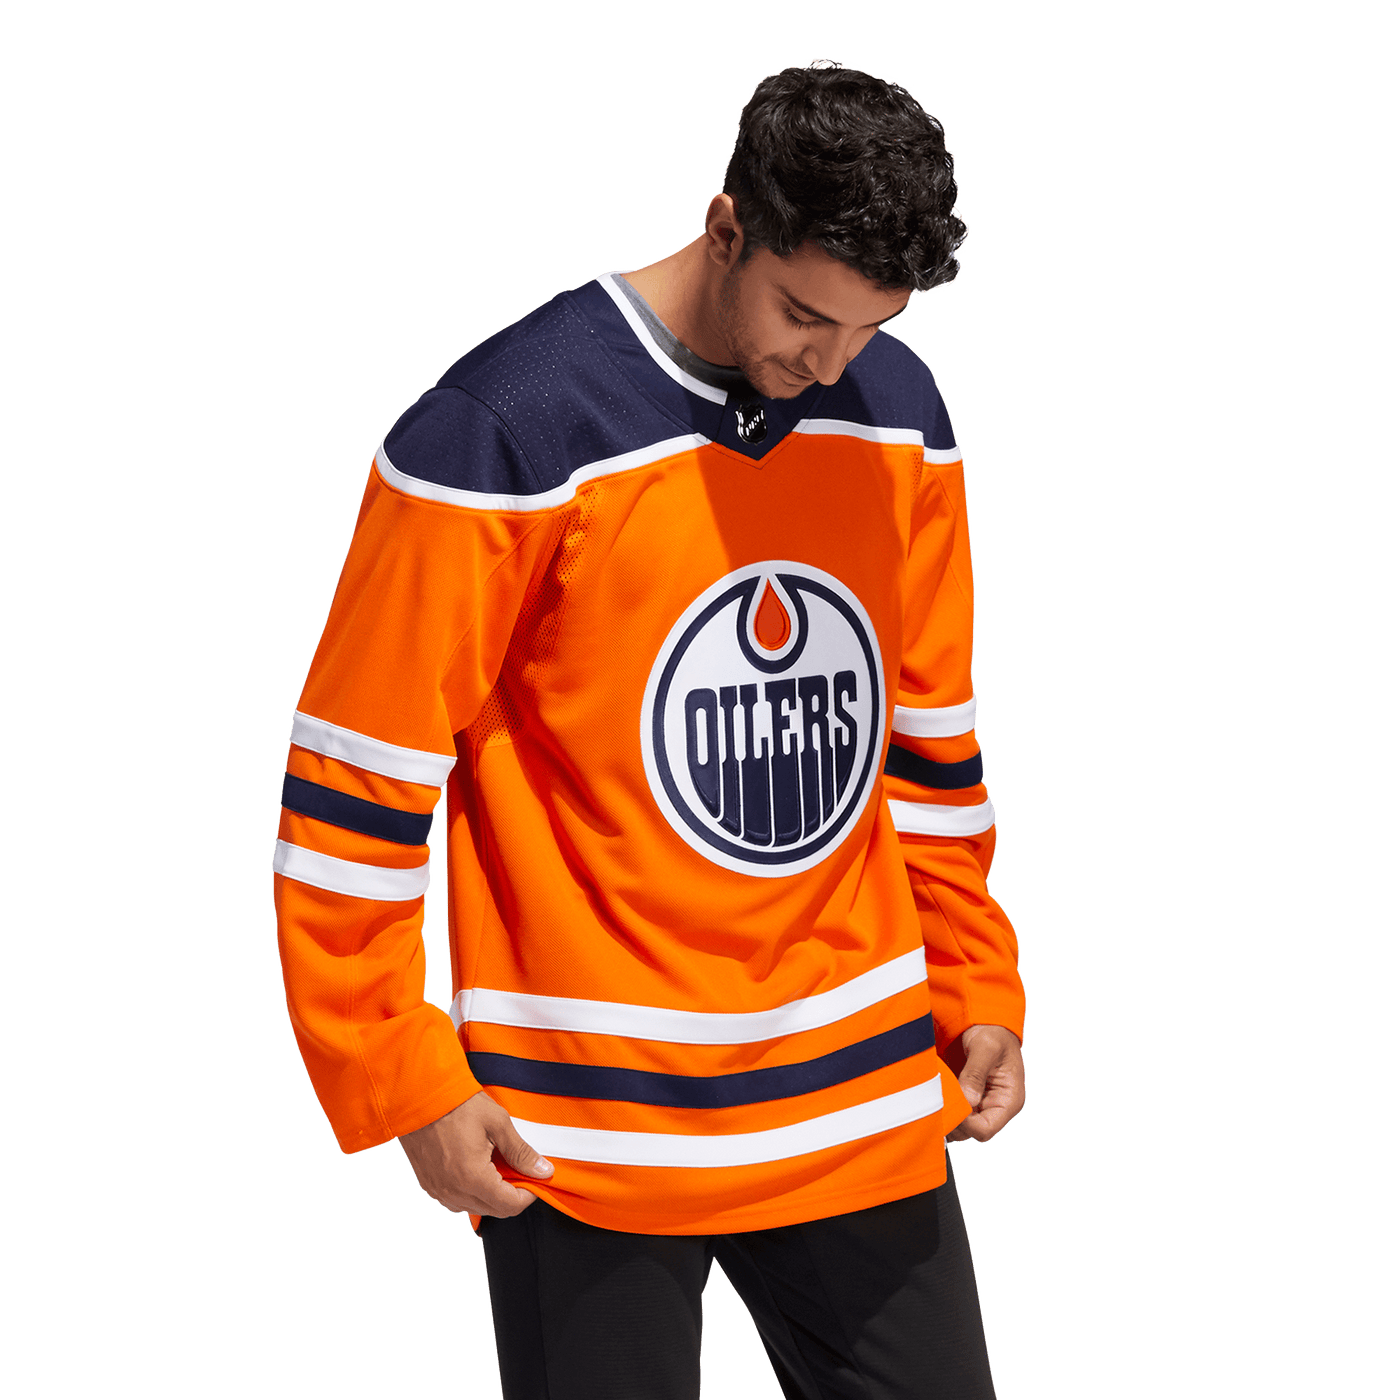 ADIDAS Edmonton Oilers adidas Prime Authentic Jersey Hockey NHL